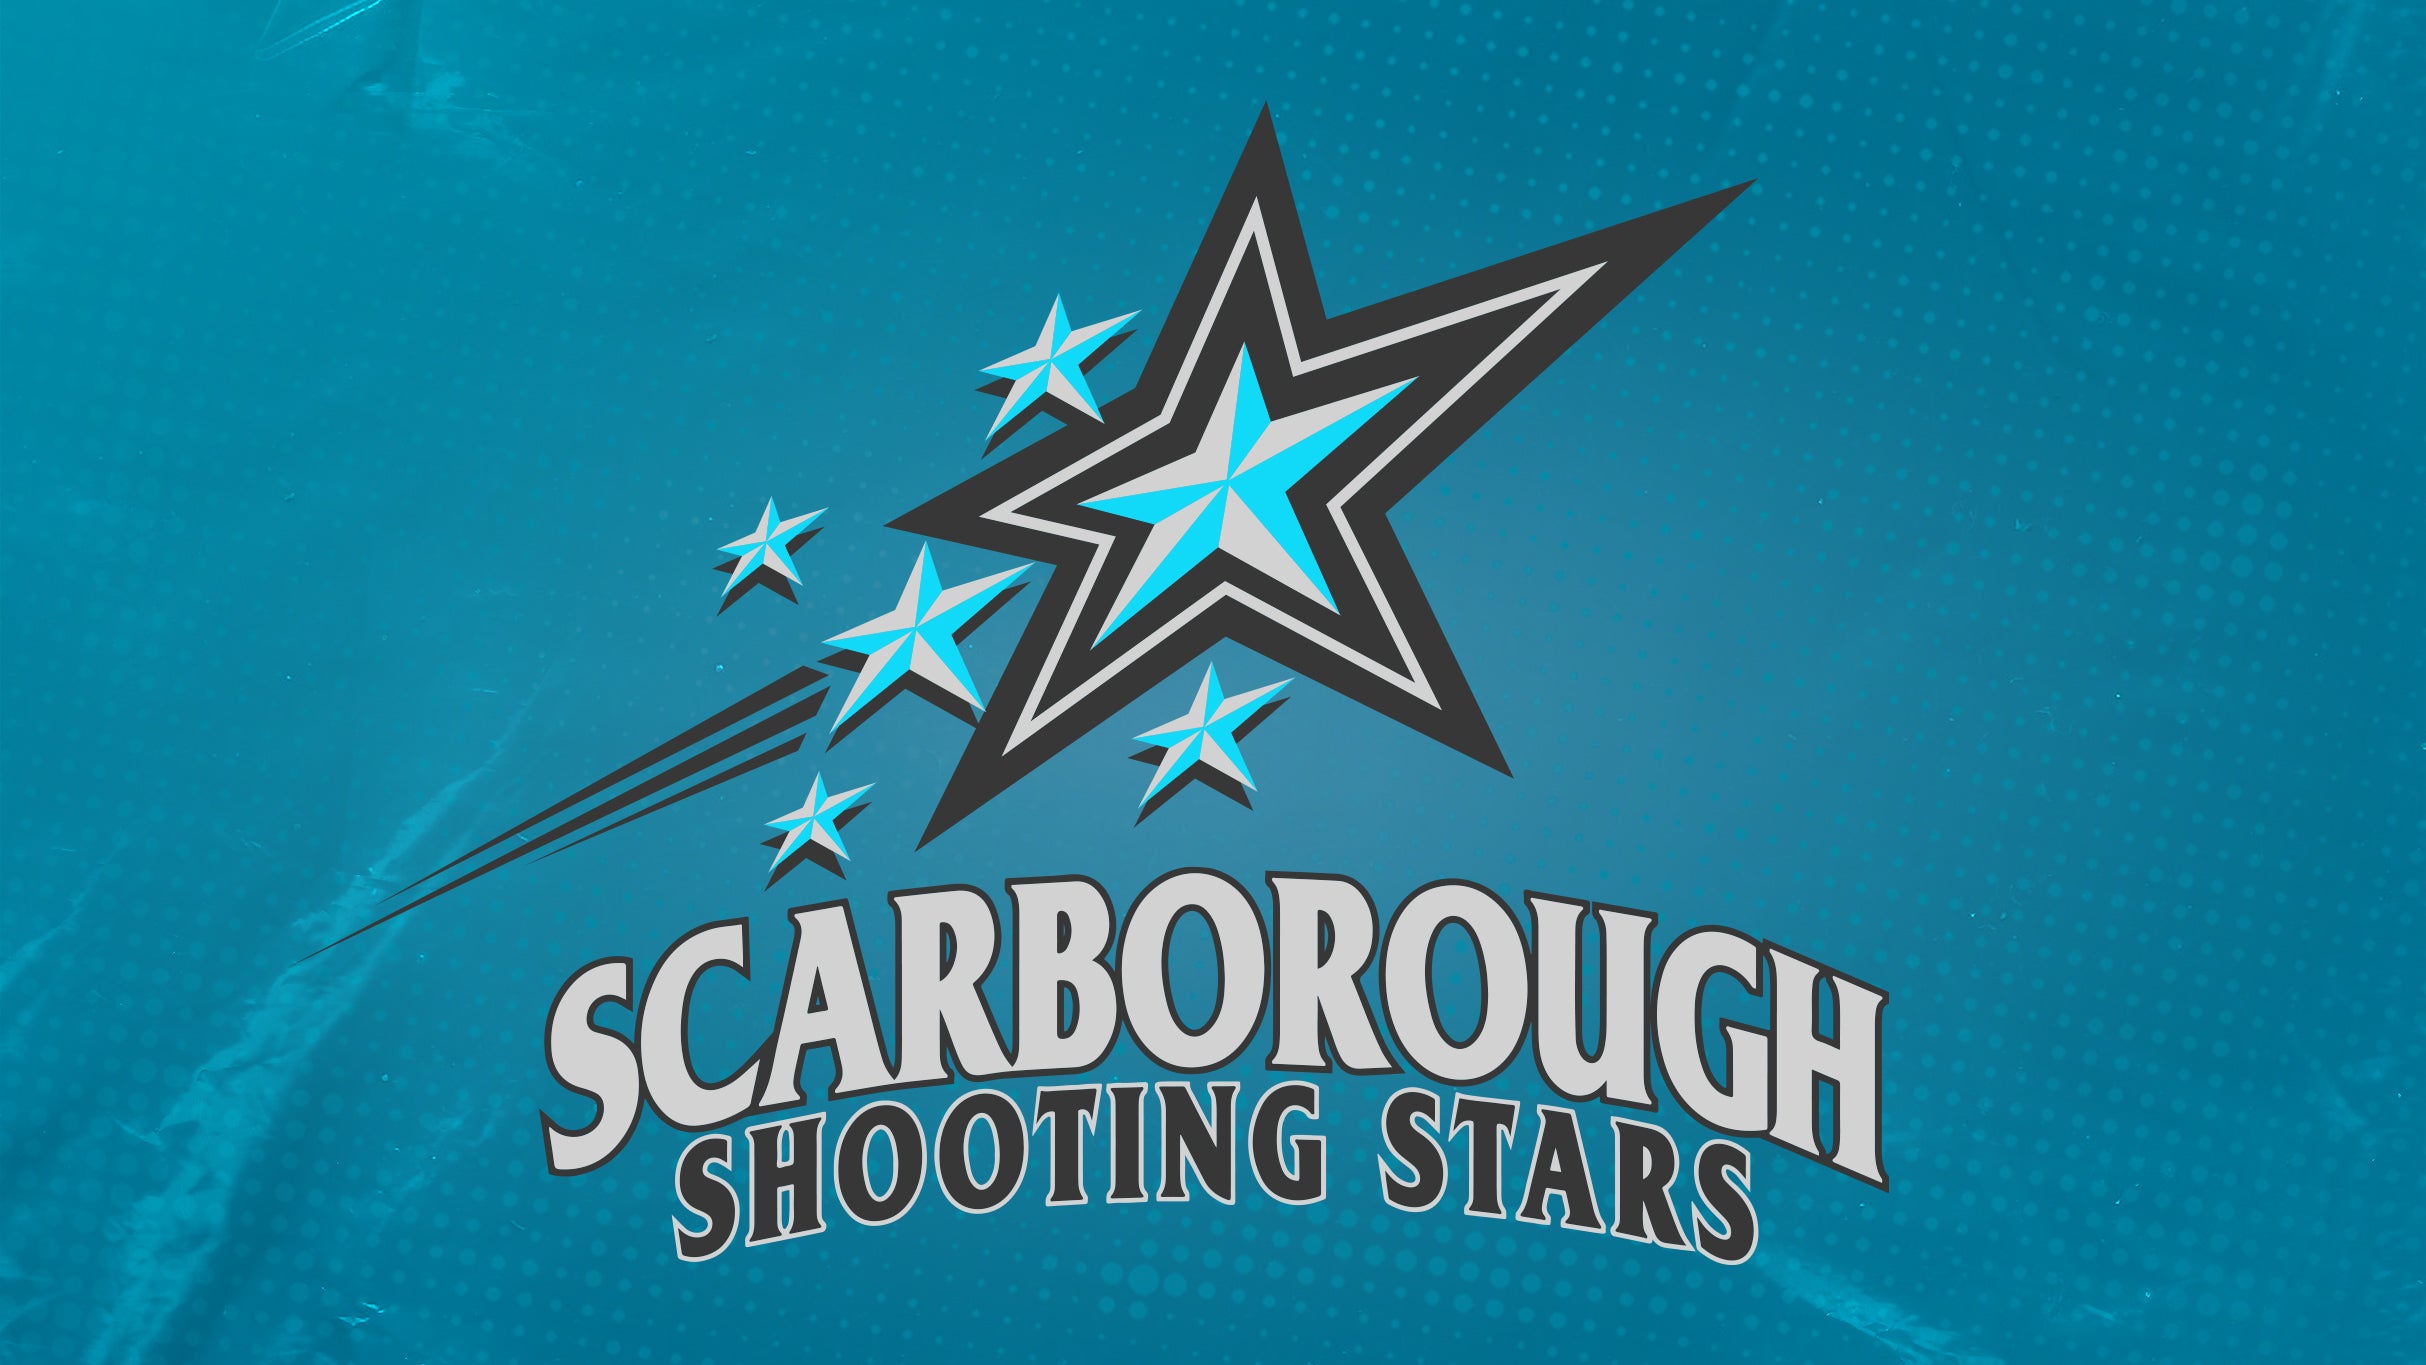 Scarborough Shooting Stars vs. Calgary Surge presale password for genuine tickets in Toronto